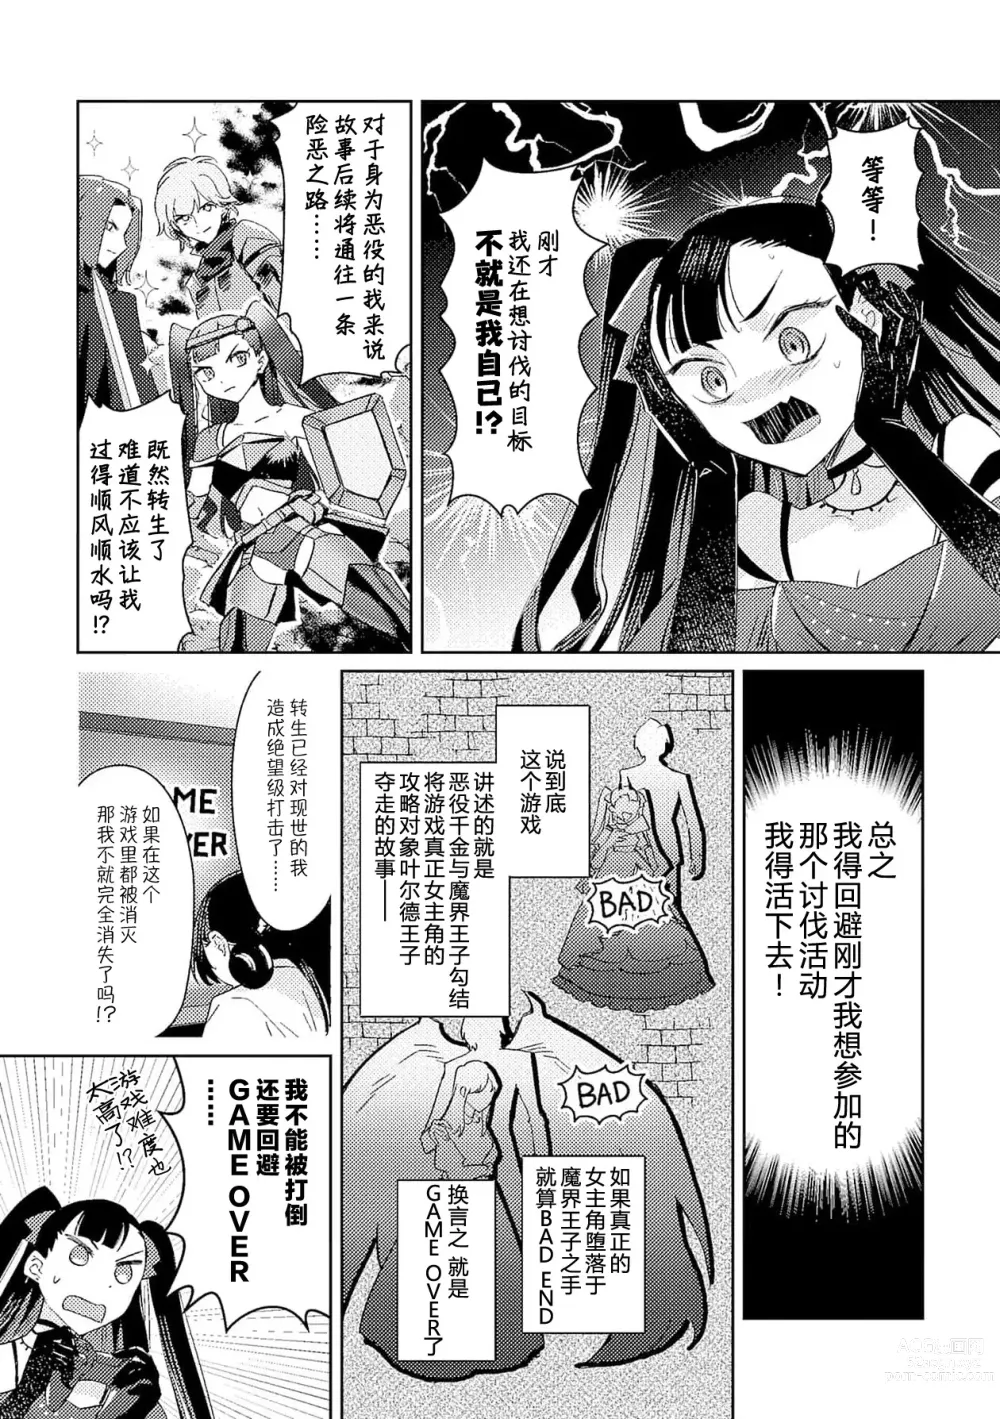 Page 7 of manga 身为恶役千金，堕落于魔界王子身下这条路线真的可以有？ 1-4